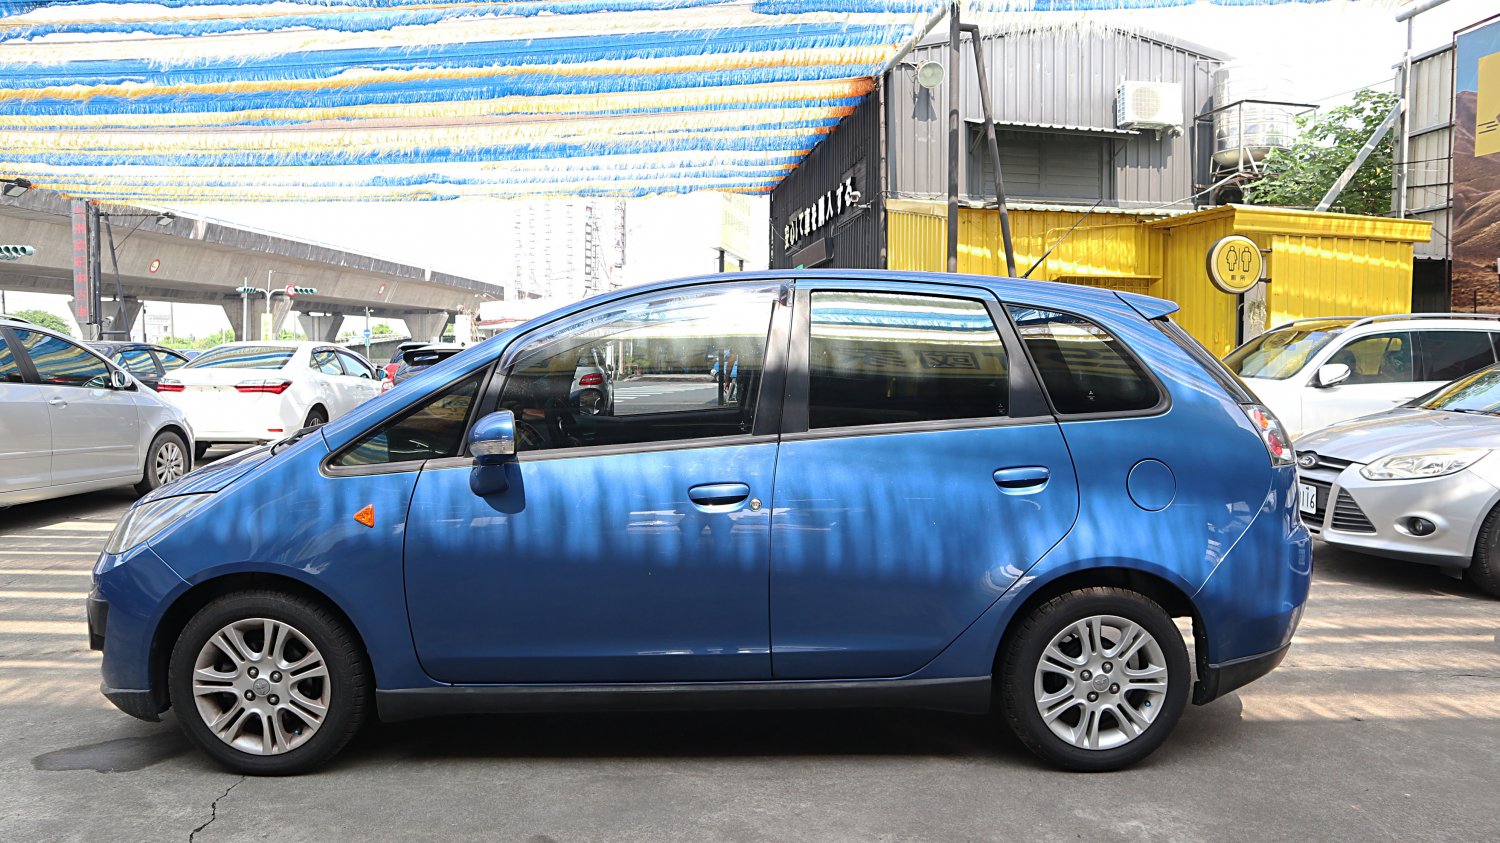 Mitsubishi 三菱 ／ Colt Plus ／ 2012年 ／ 2012年 Mitsubishi Colt Plus 藍色 三菱中古車 ／ 成交區